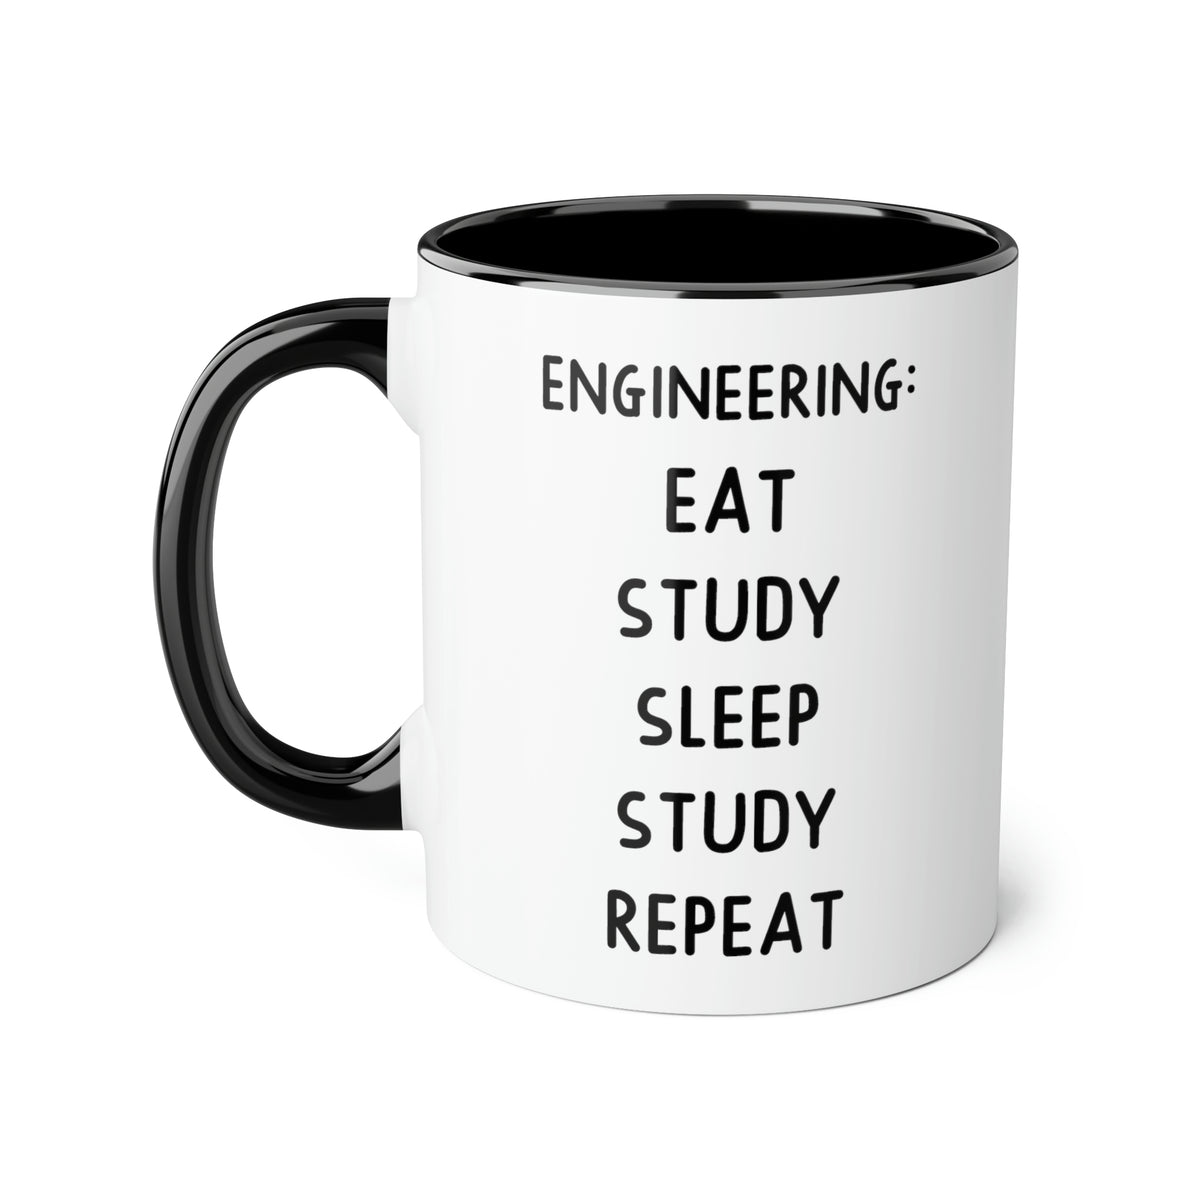 Funny Engineer Two Tone Mug, Engineering Eat Study Sleep Study, Best For Engineering Student, Computer Chemical Engineer, Men Women